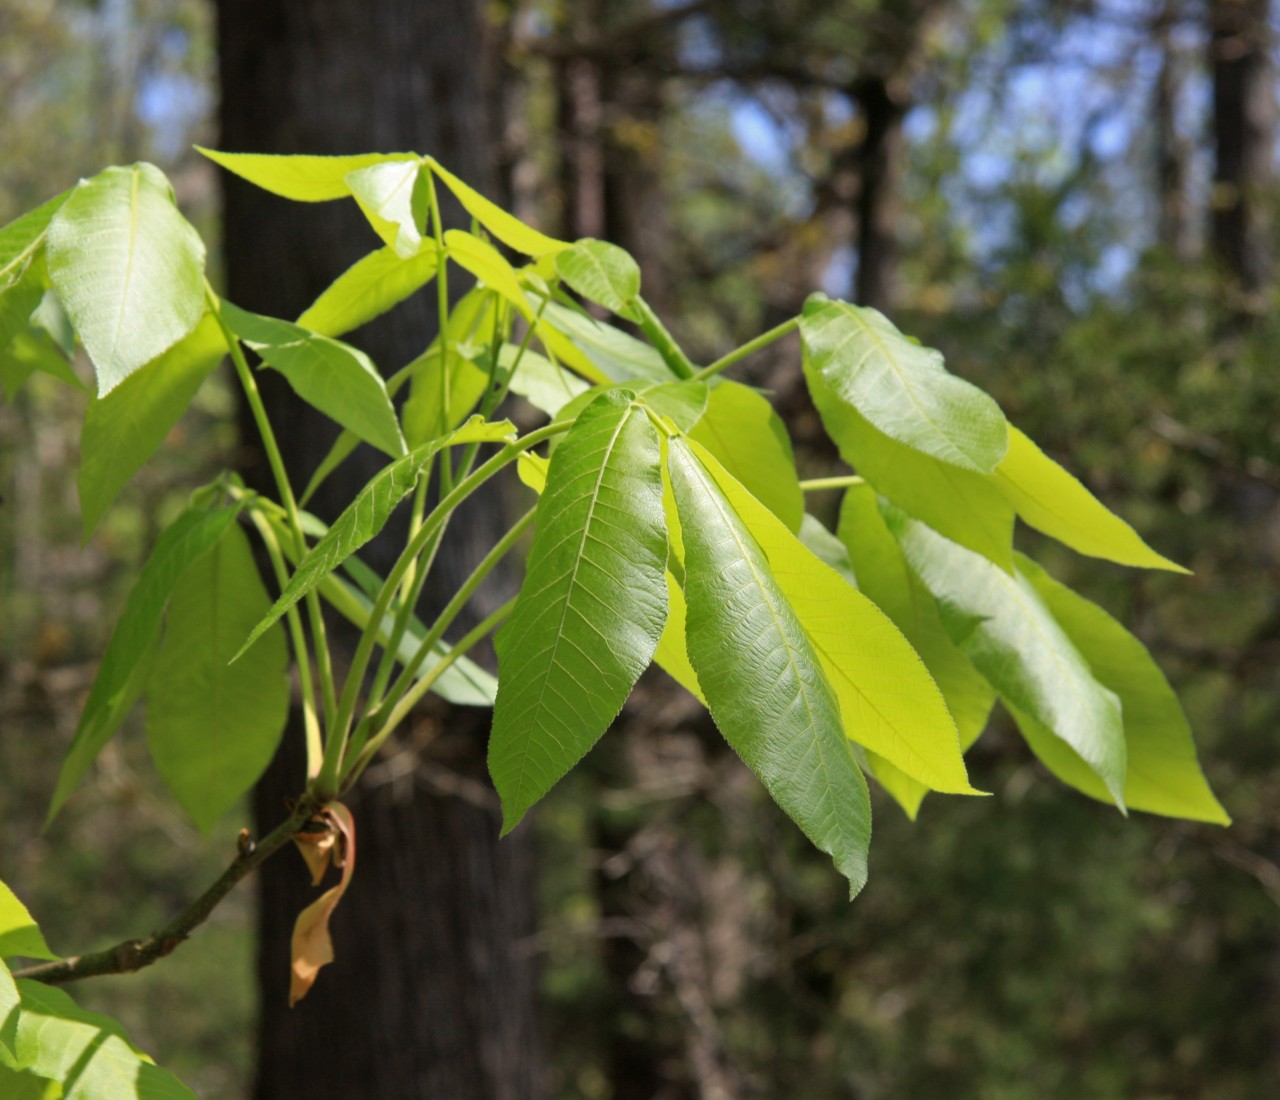 Hickory tree leaves